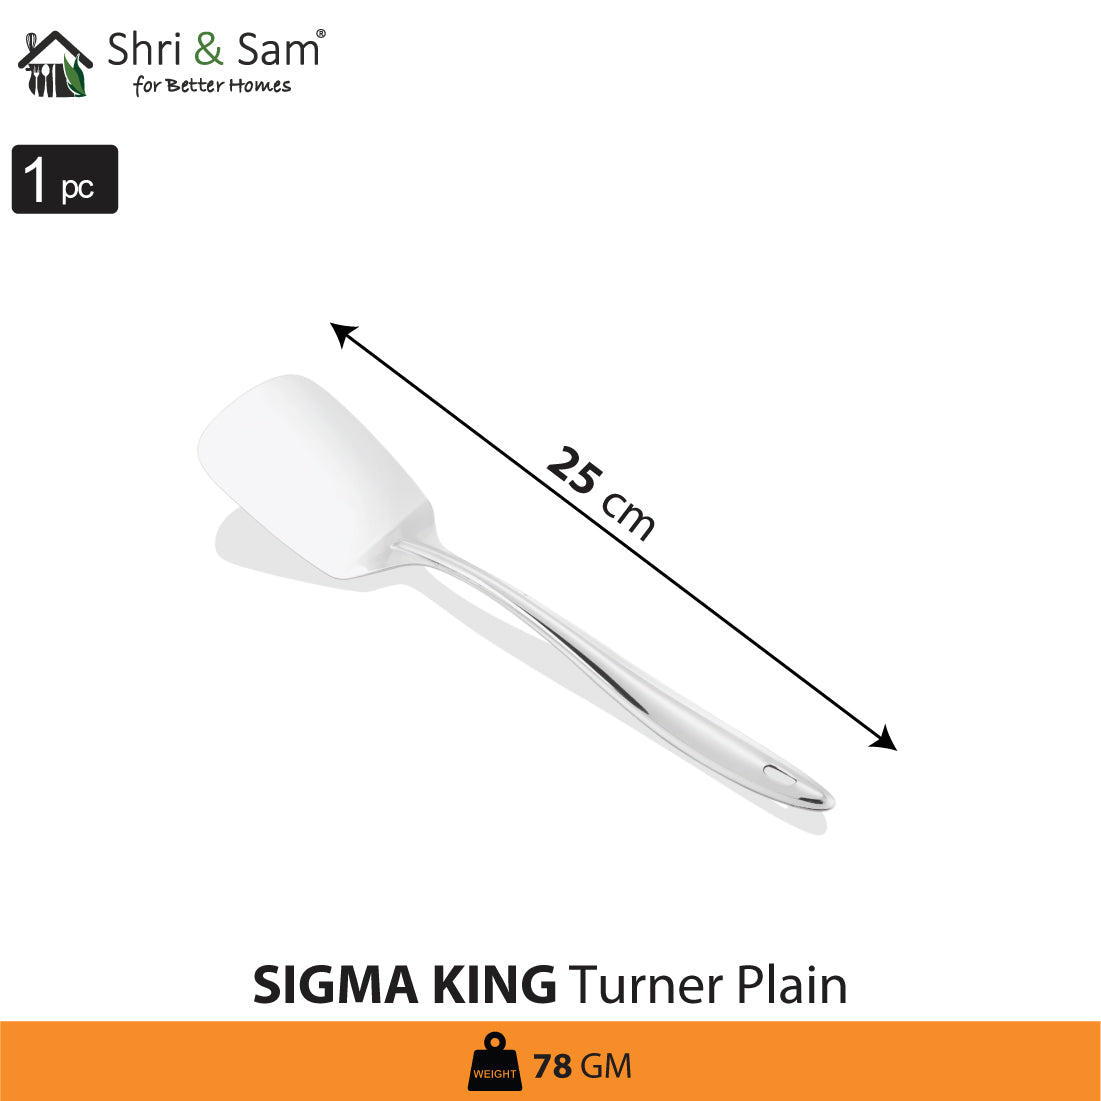 Stainless Steel Turner Plain Sigma King